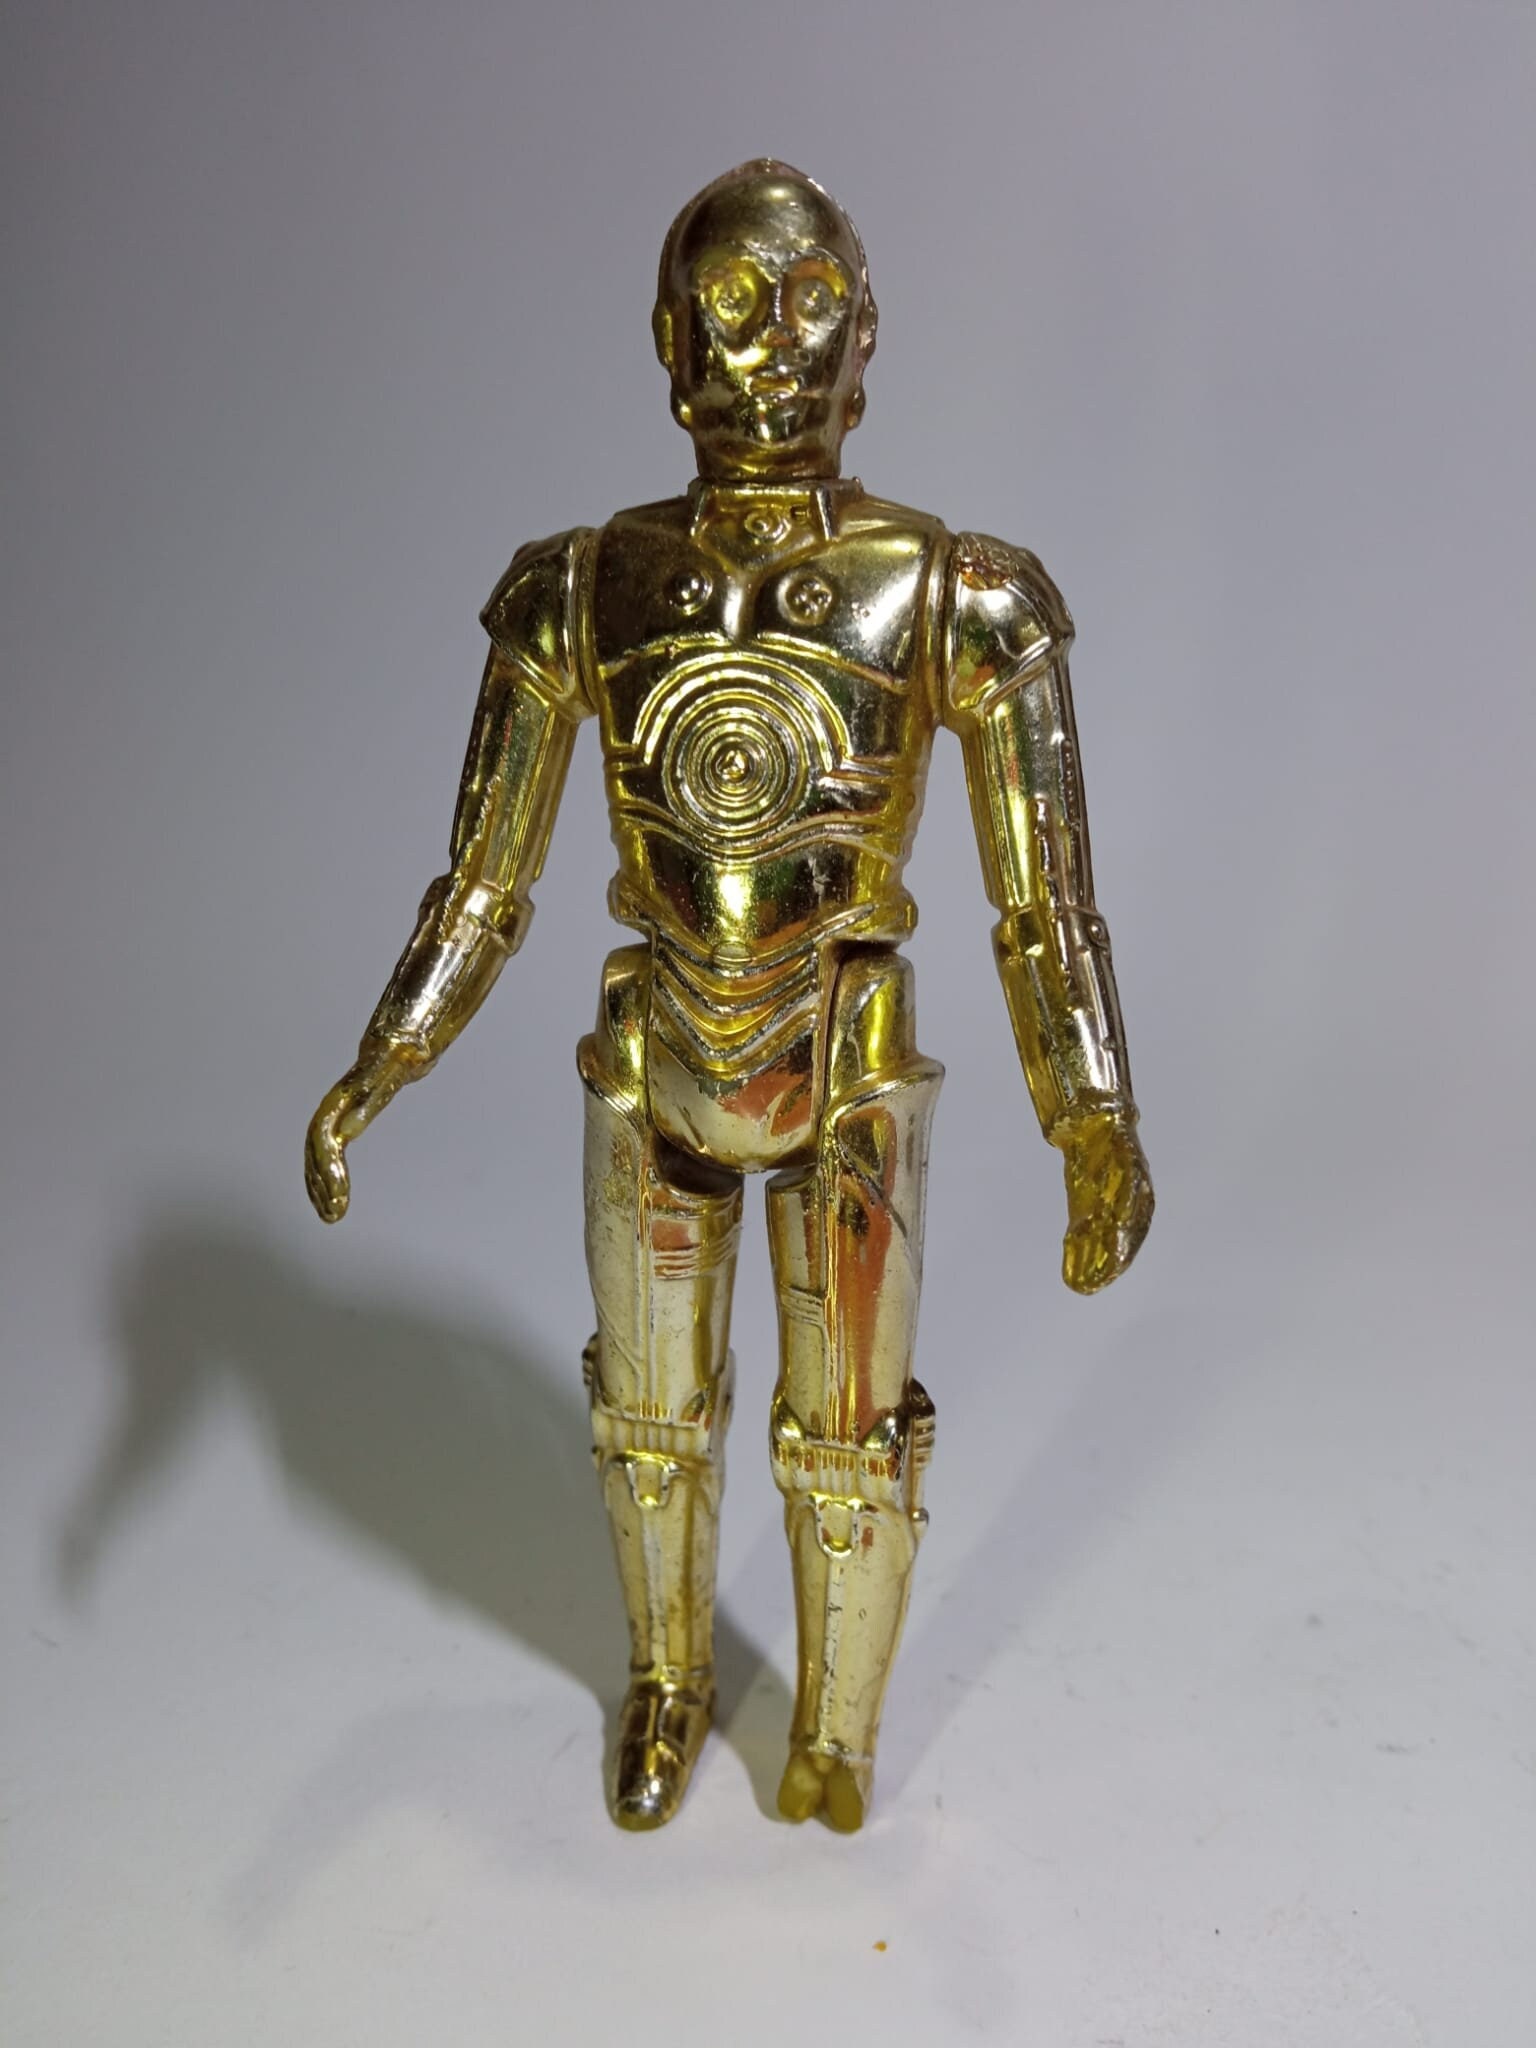 Rare Star Wars Tours C-3PO R2-D2 Coin Bank Figures Disney Park Hollywood  Lucas +